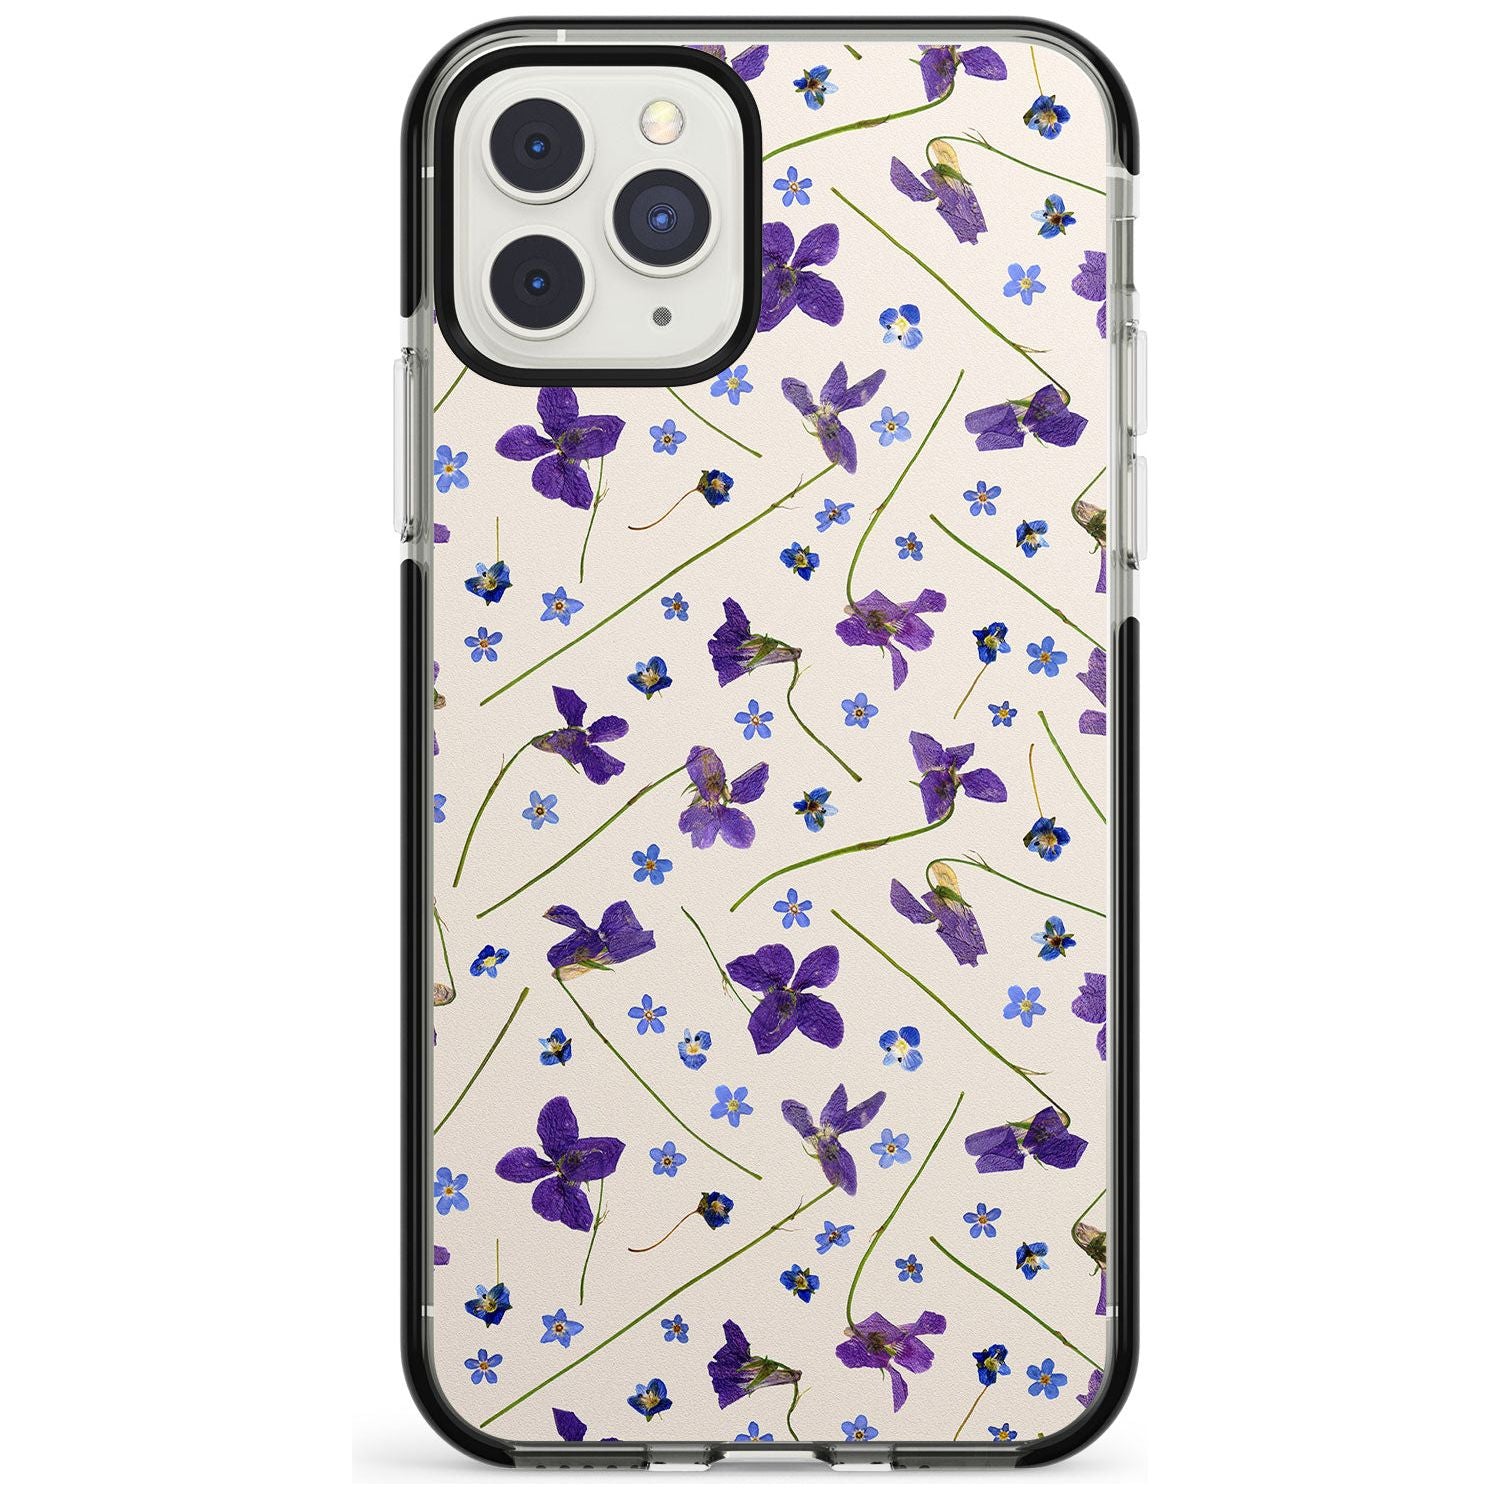 Violet Floral Pattern Design - Cream Black Impact Phone Case for iPhone 11 Pro Max